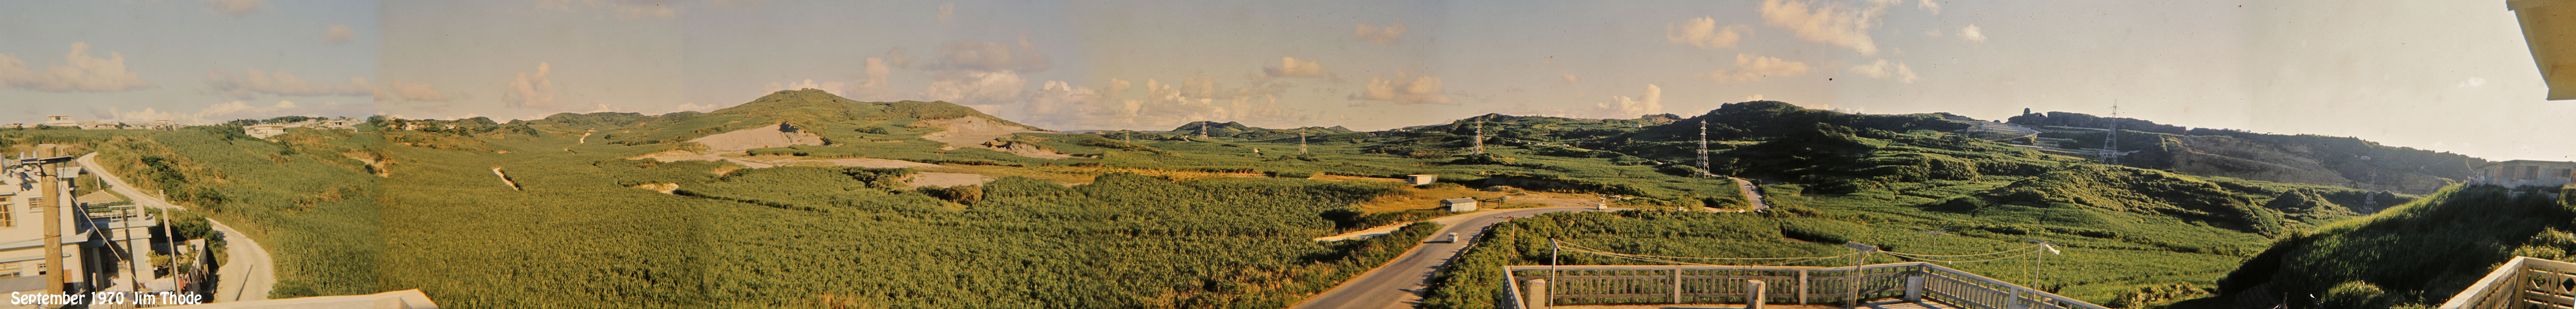 1970 View from Apartment looking south toward Hacksaw Ridge